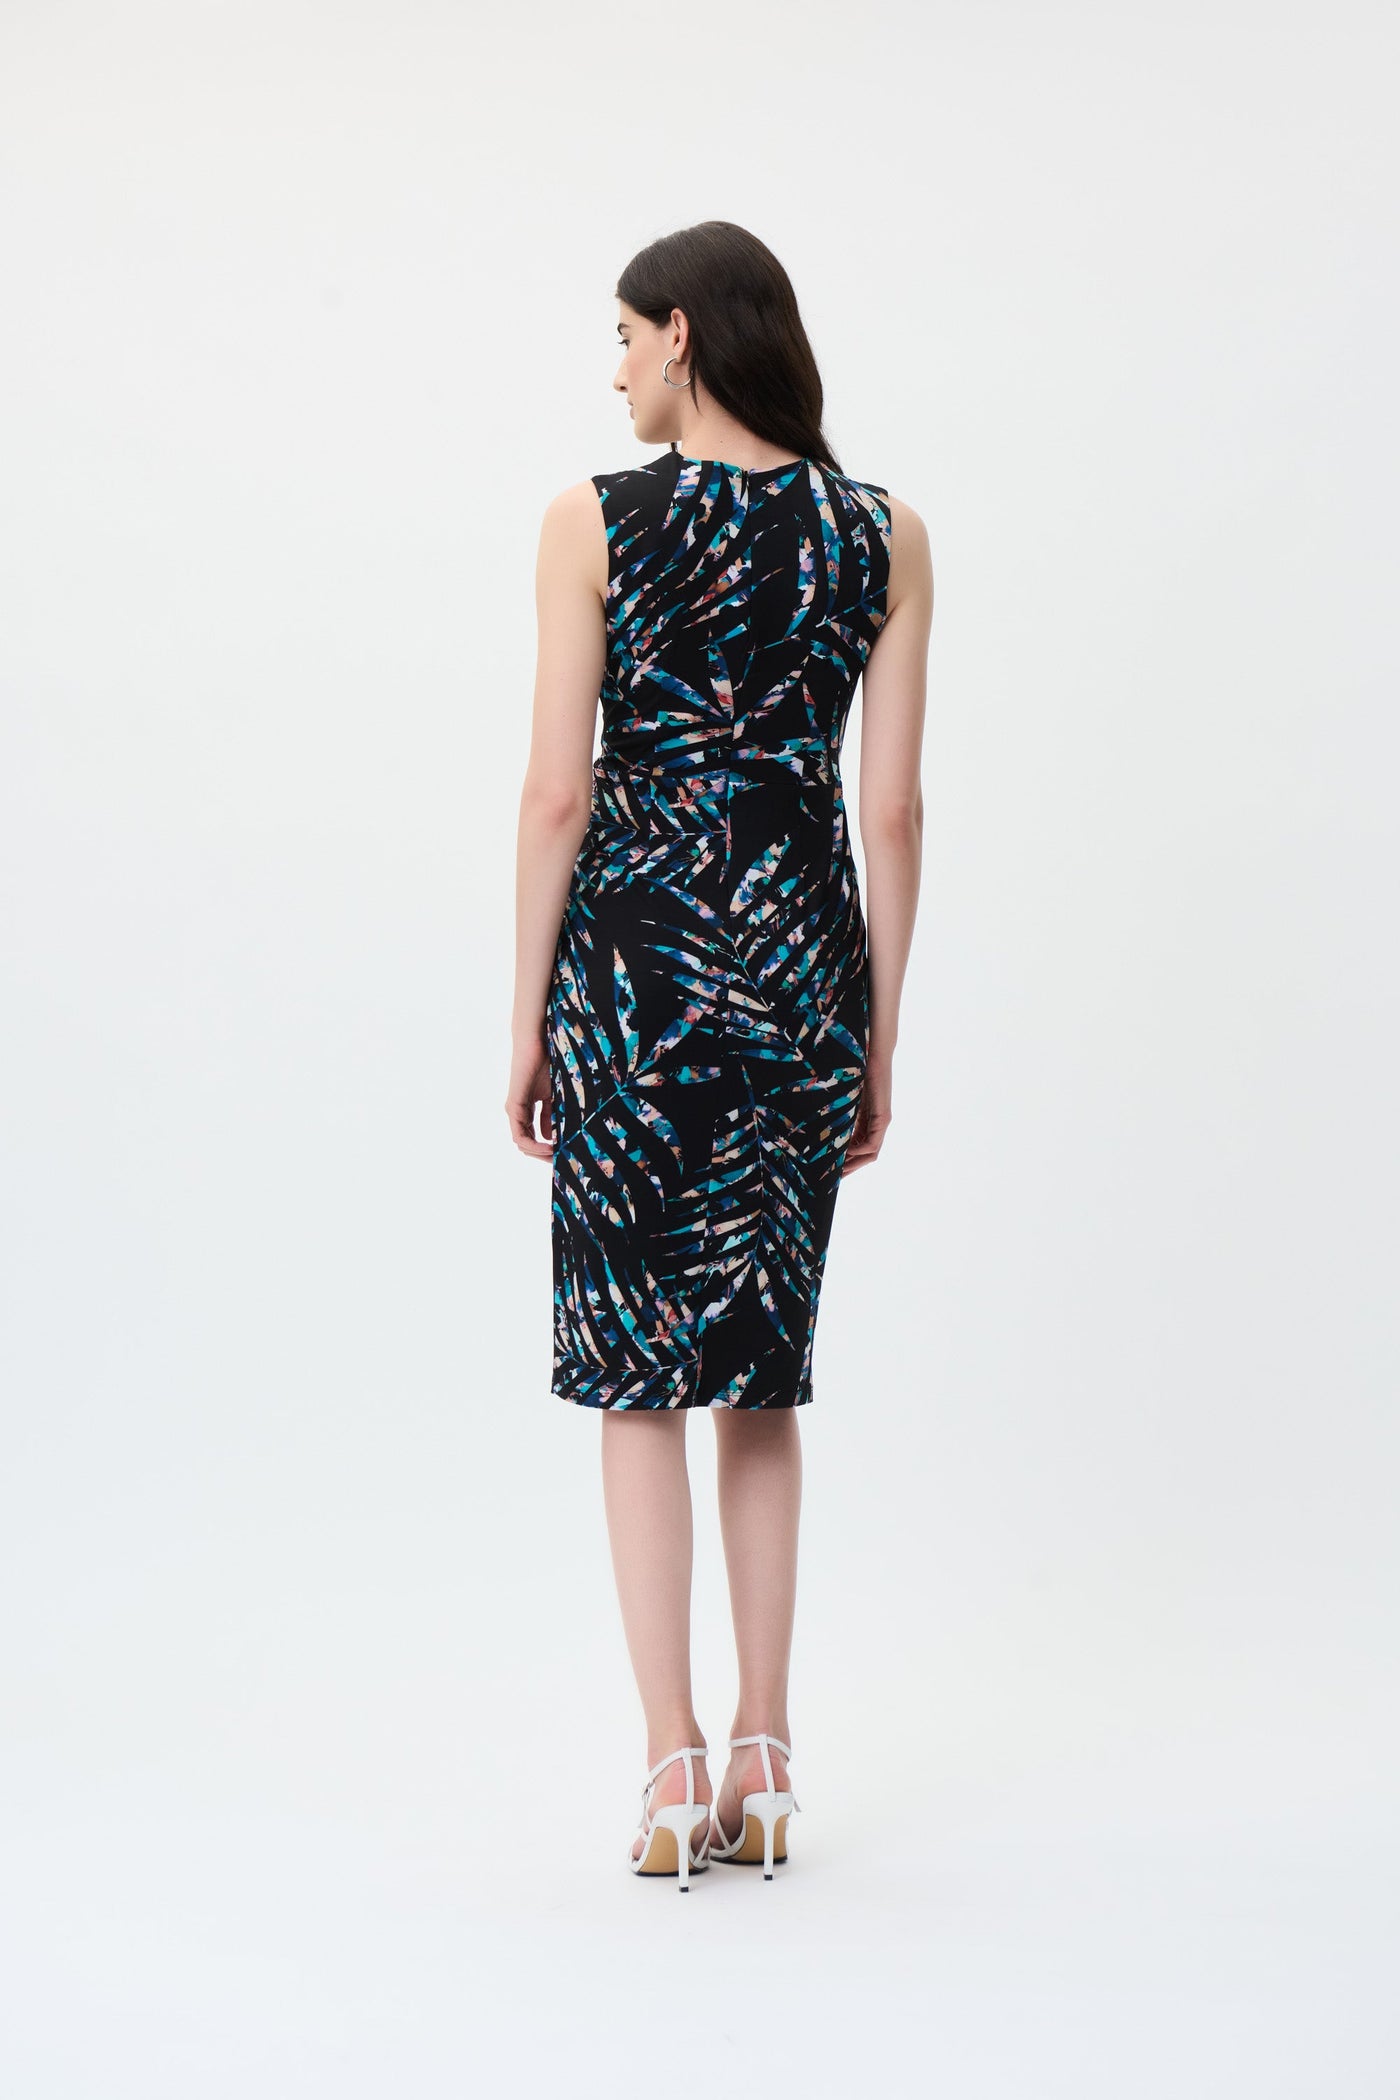 Joseph Ribkoff Dress Style 231108